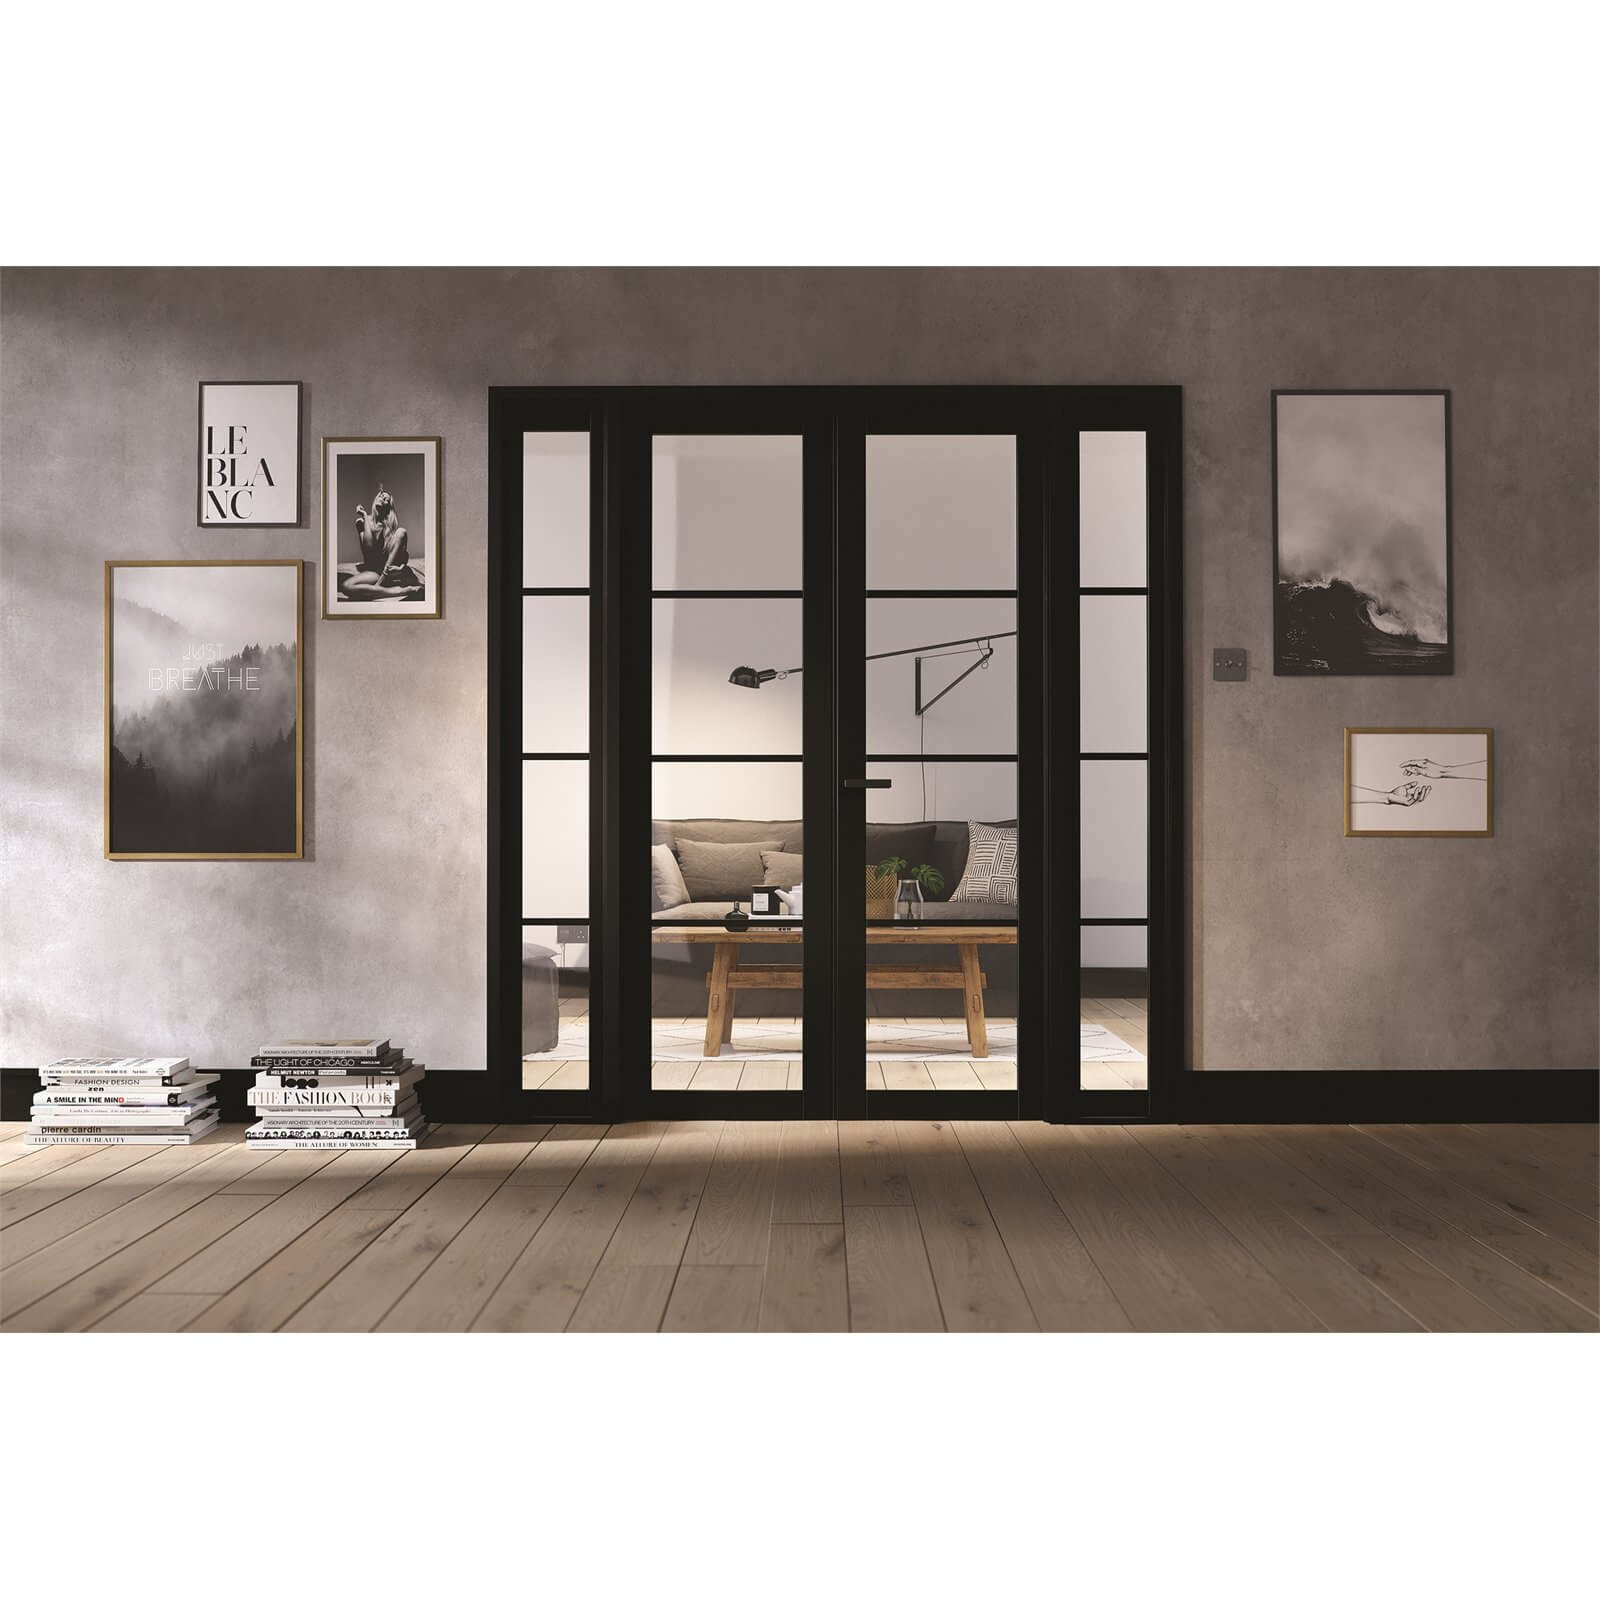 Soho Room Divider W6 - Black - 2031 x 1904 x 35mm